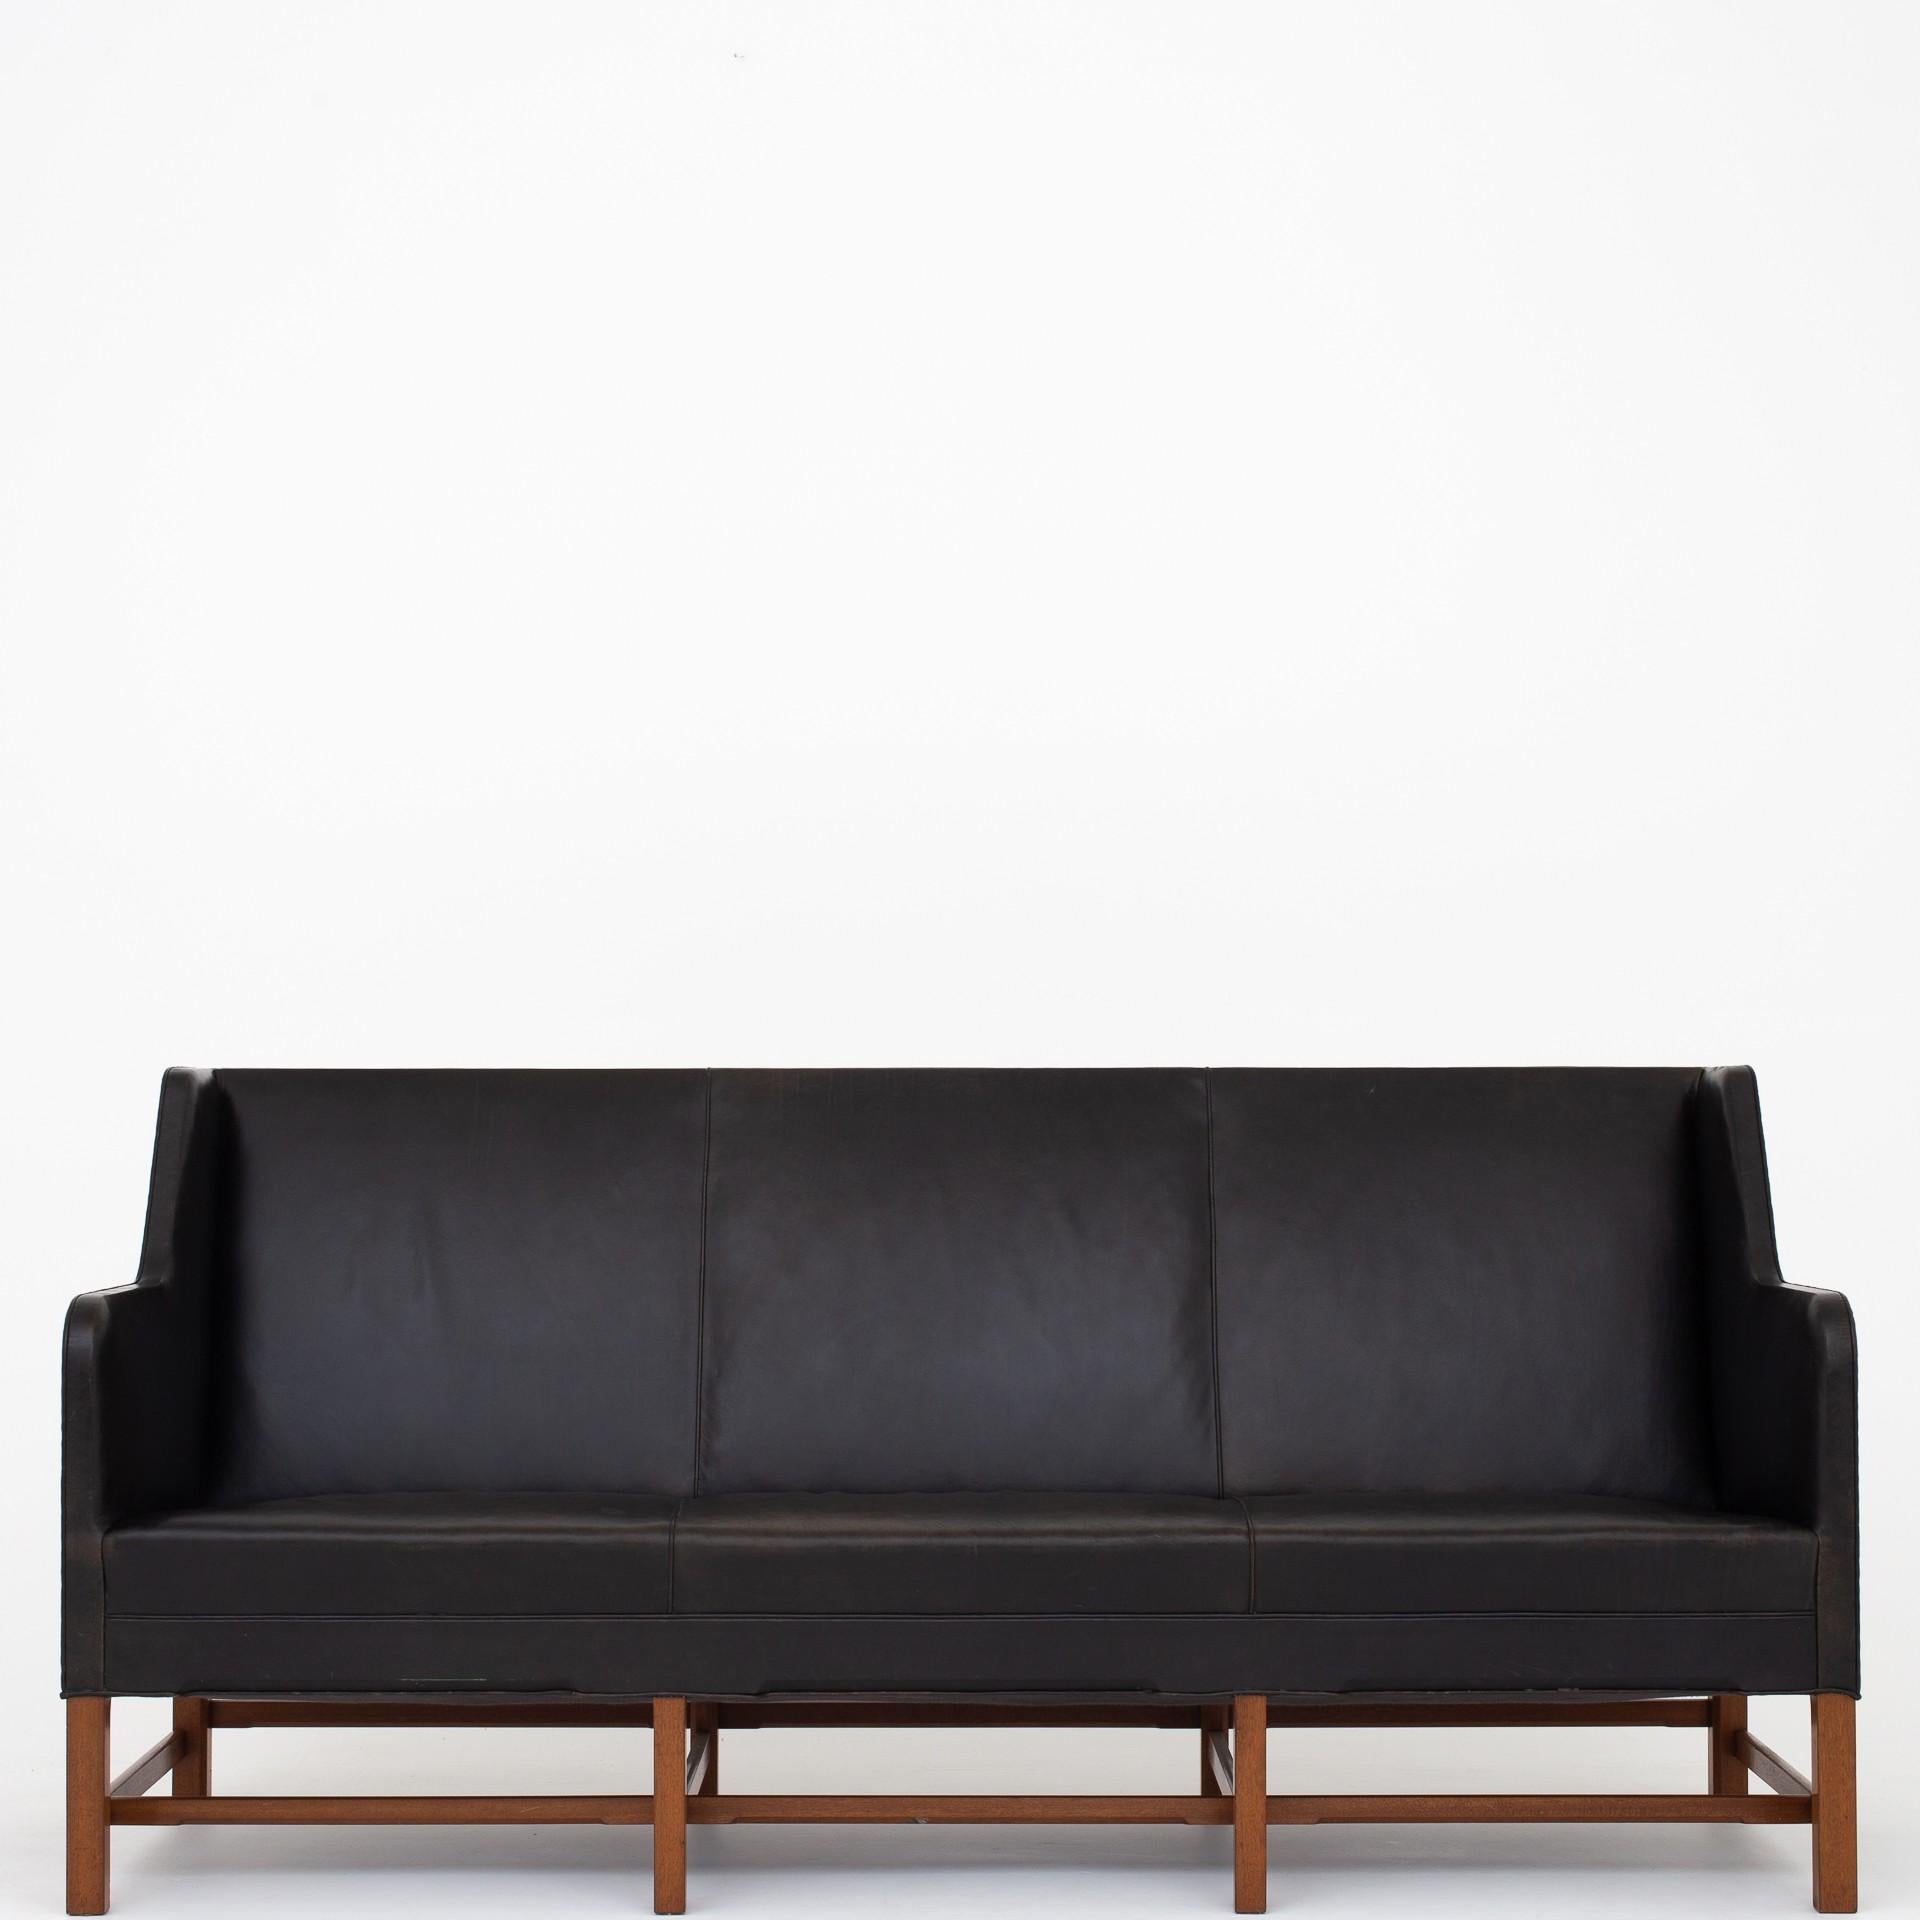 KK 5011 Sofa by Kaare Klint 1